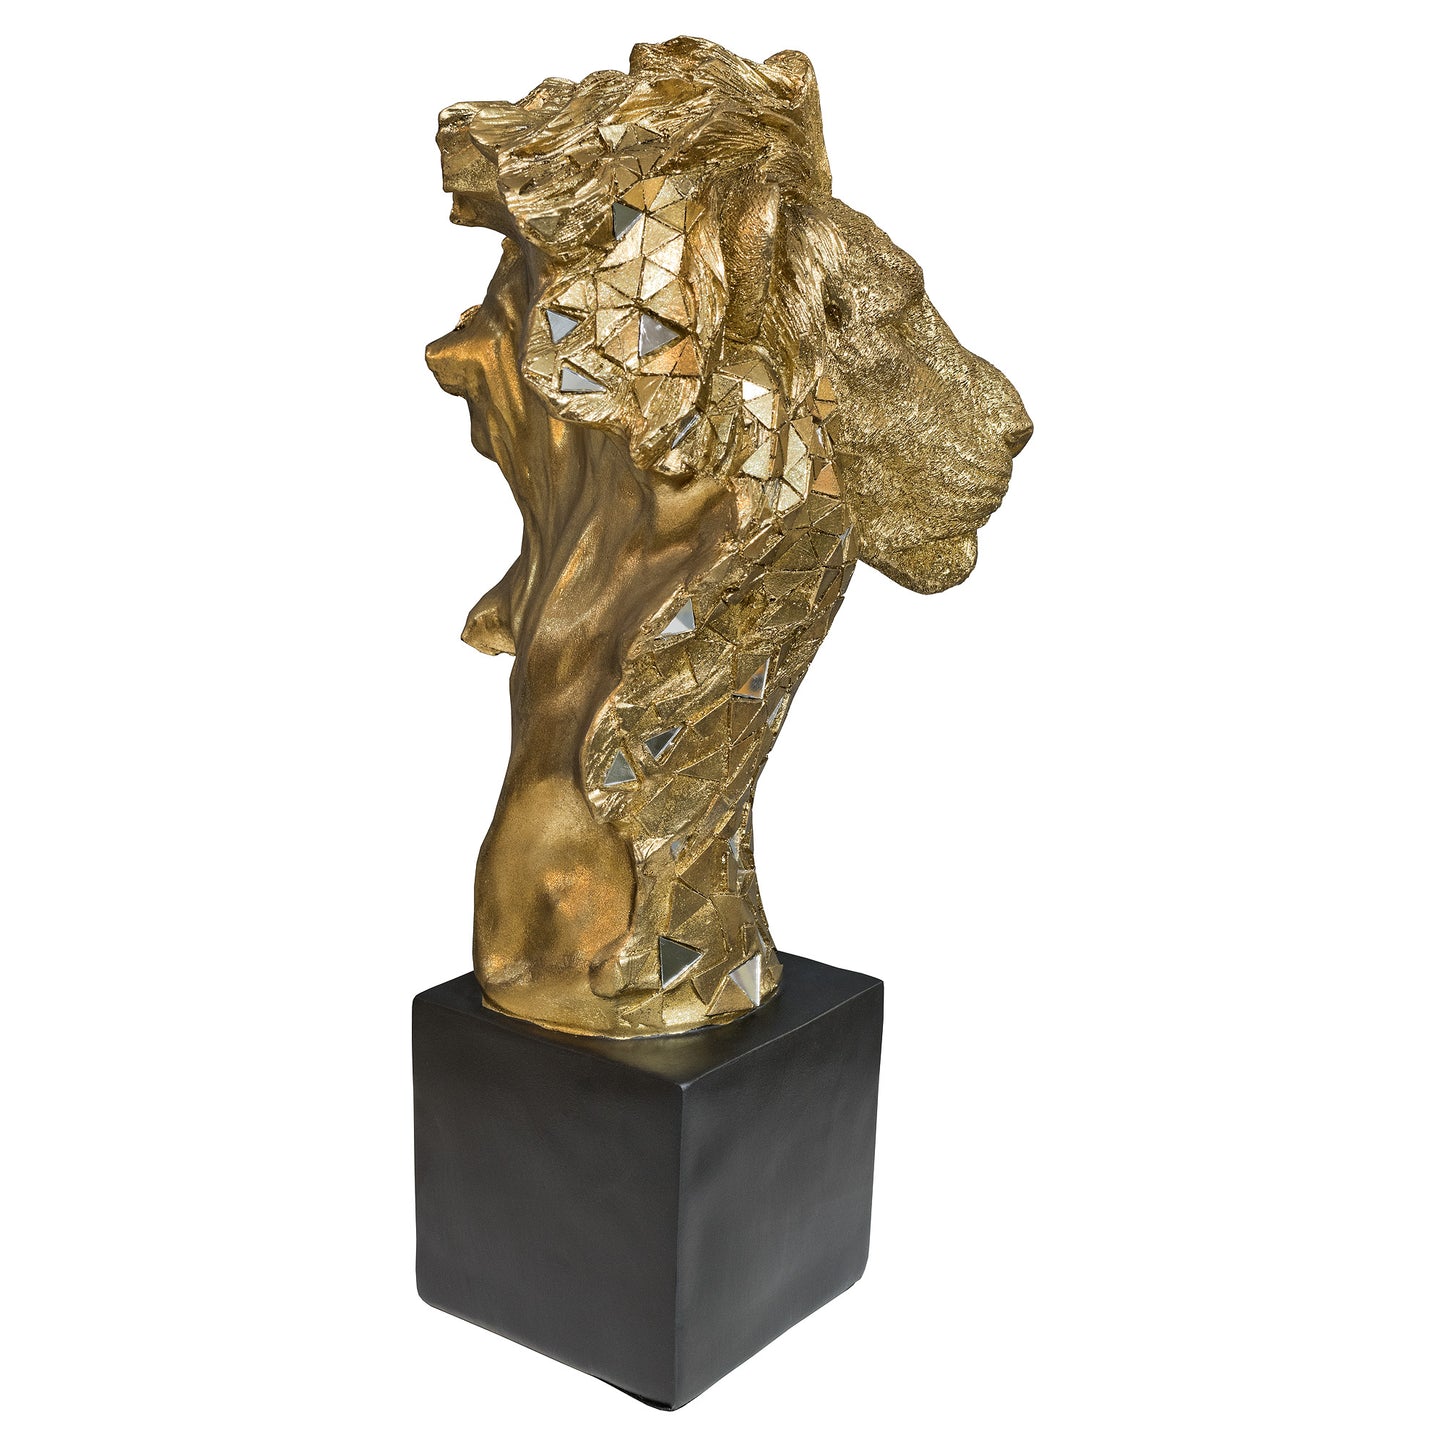 Gold Lion Bust Ornament - The Happy Den